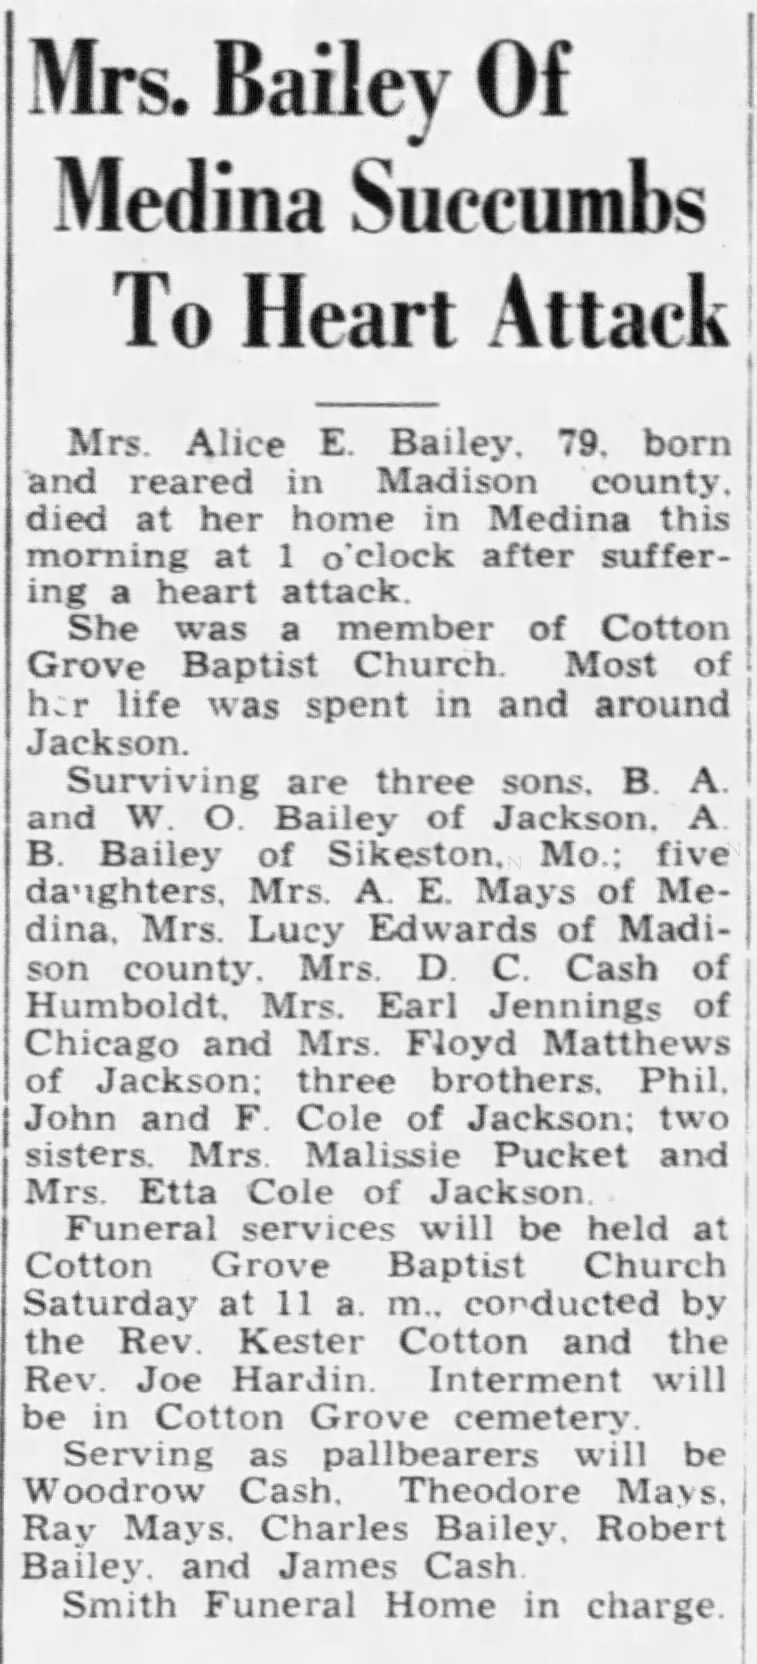 The Jackson Sun (Jackson, Tennessee)
    06 Dec 1940, Fri
    Page 5